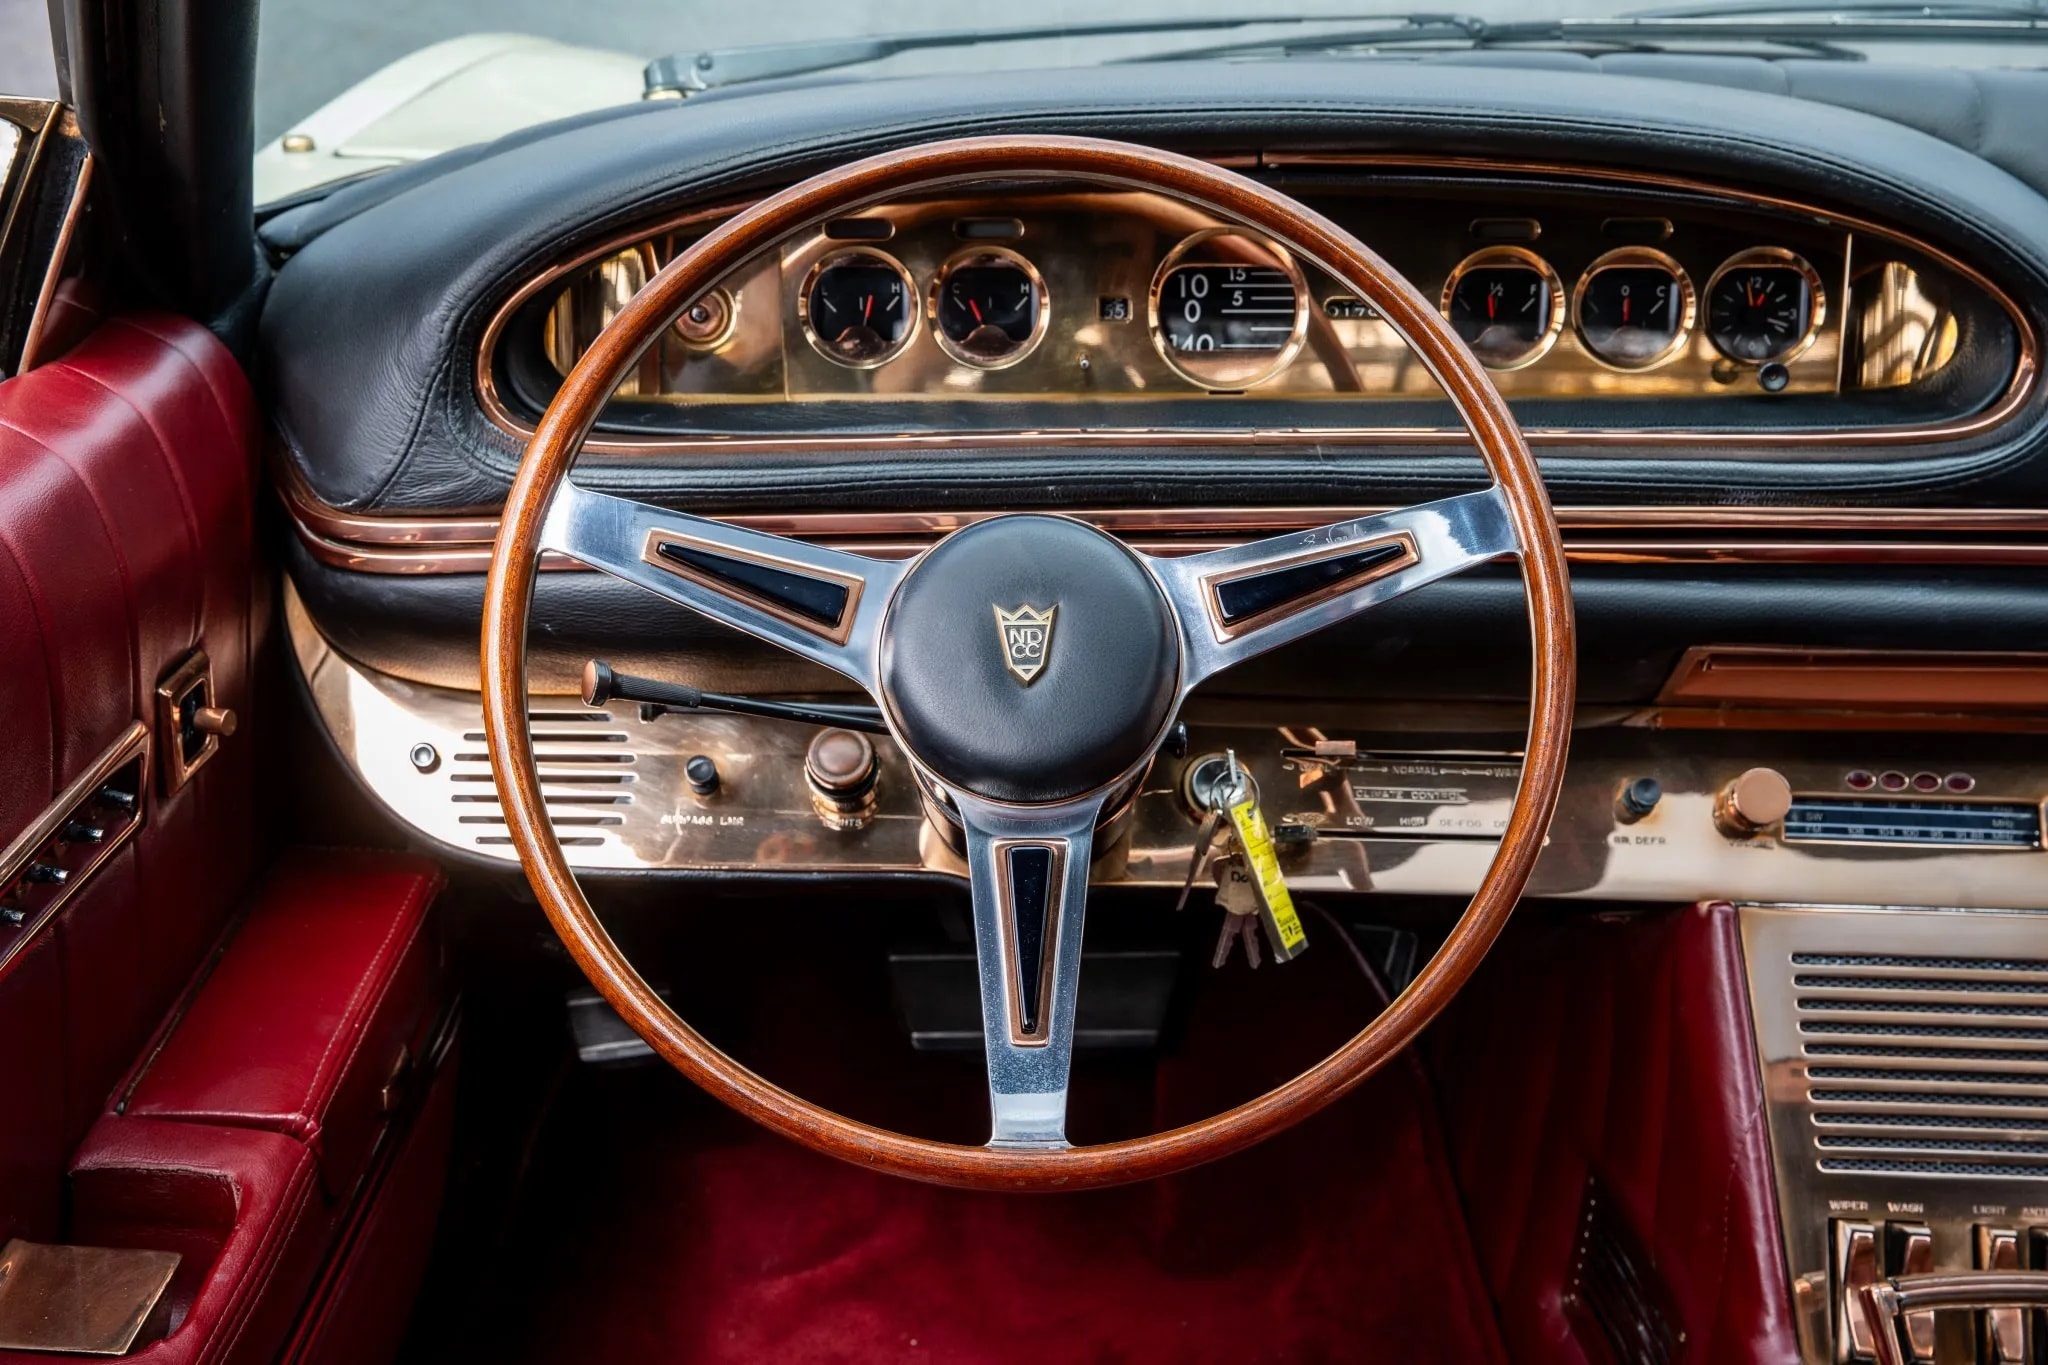 1967 Exemplar I Concept Car Rediscovered